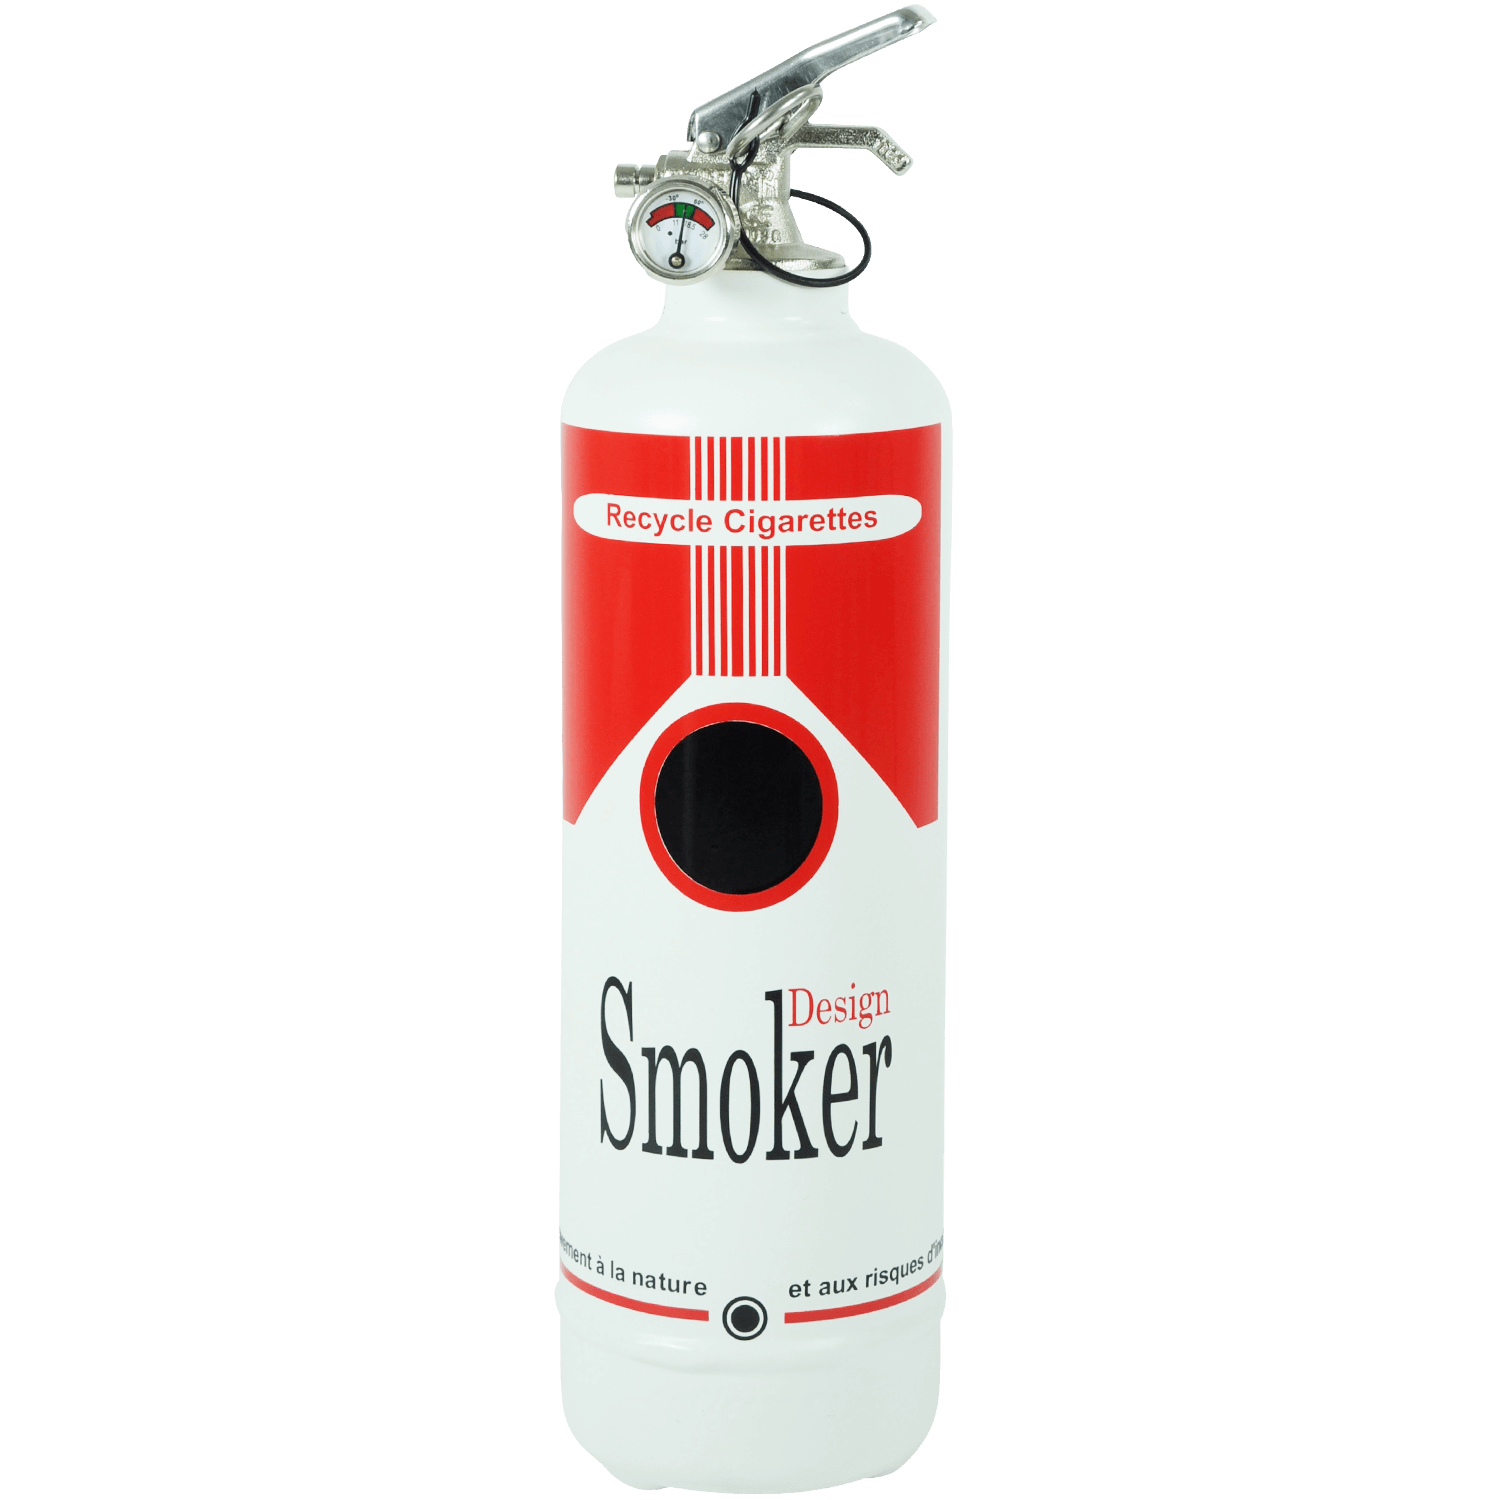 Posacenere Smoke : Posacenere di design